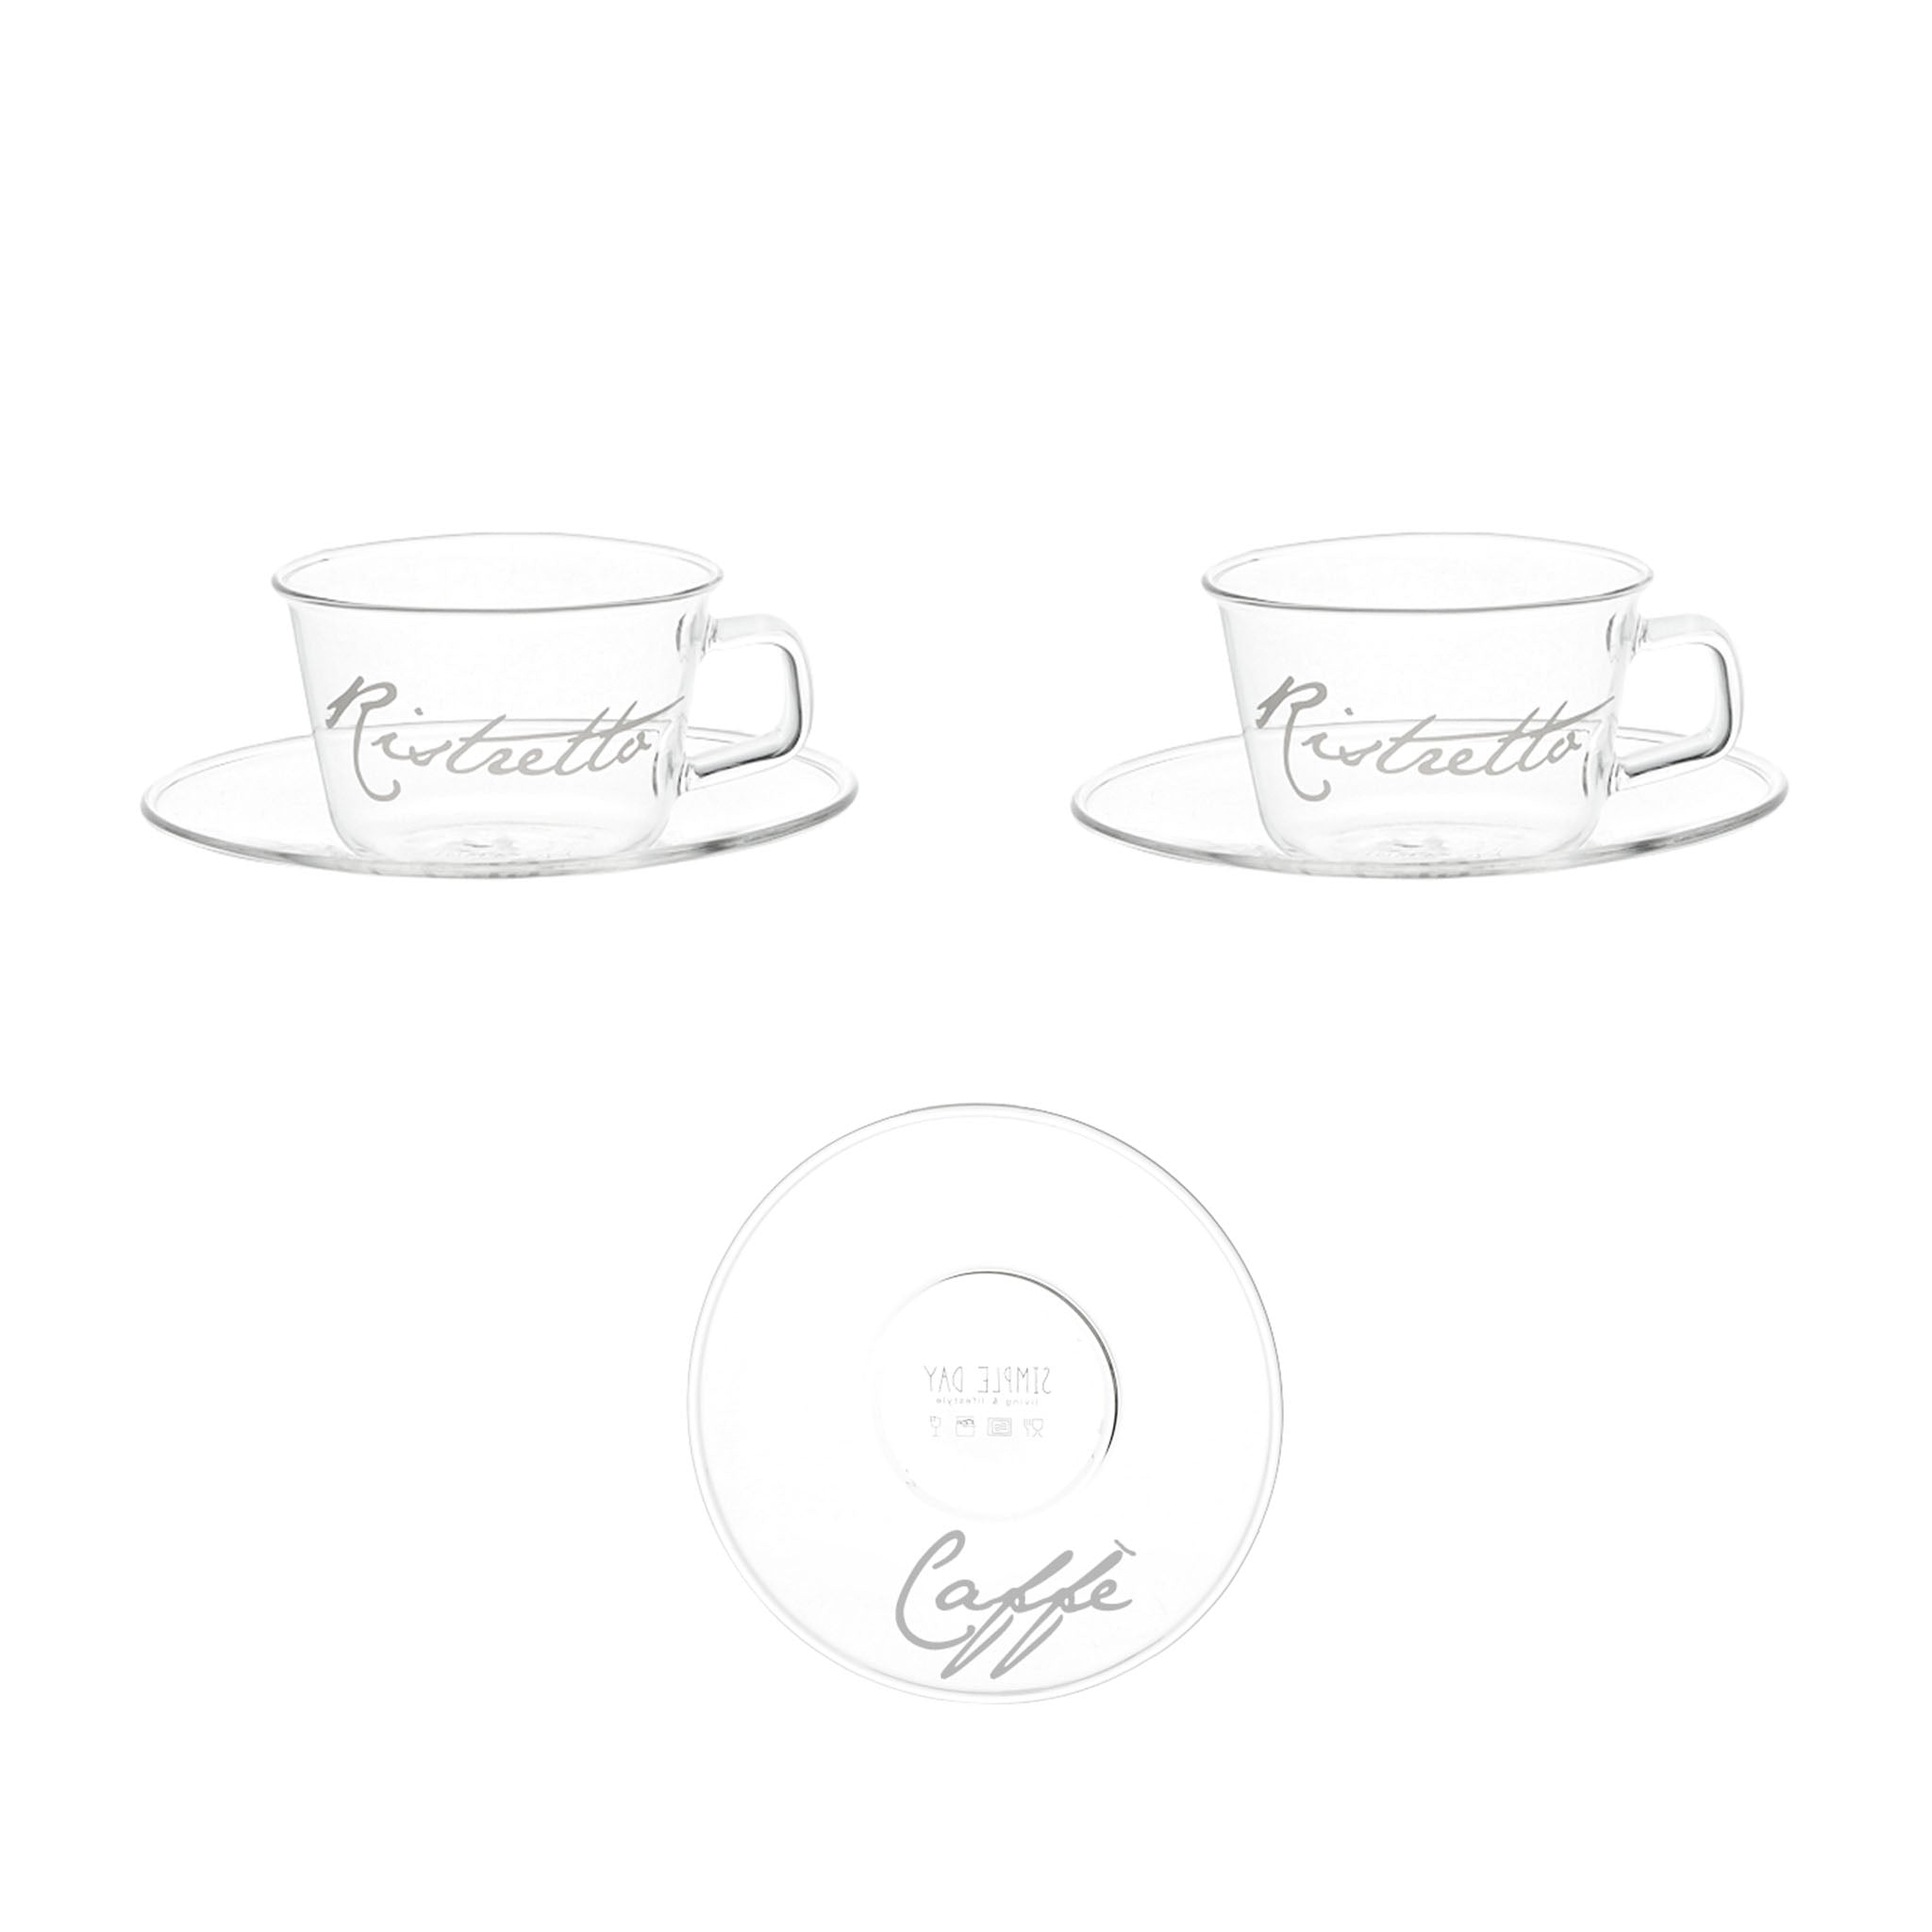 Set of 2 espresso cups with saucer Ristretto